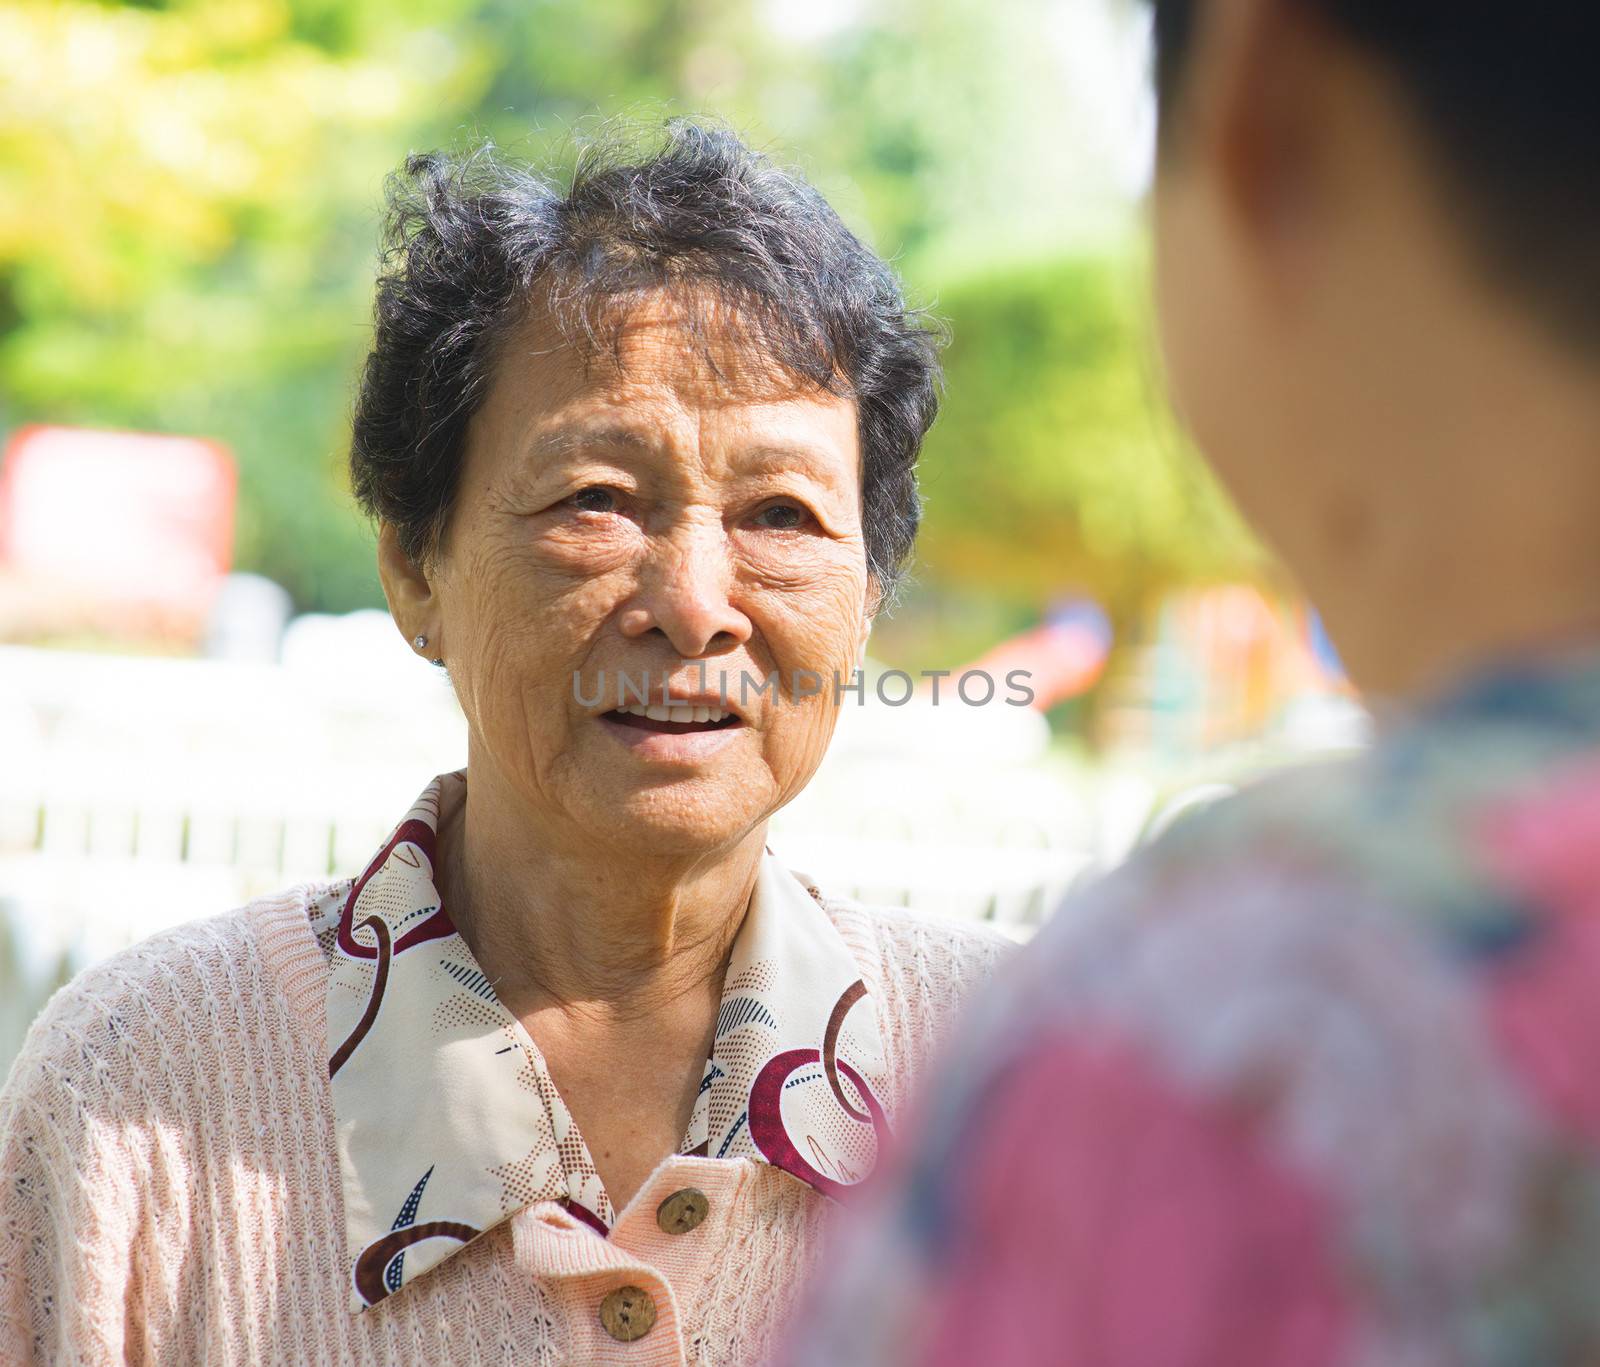 Asian 80s senior women having conversation at outdoor park, candid shot.